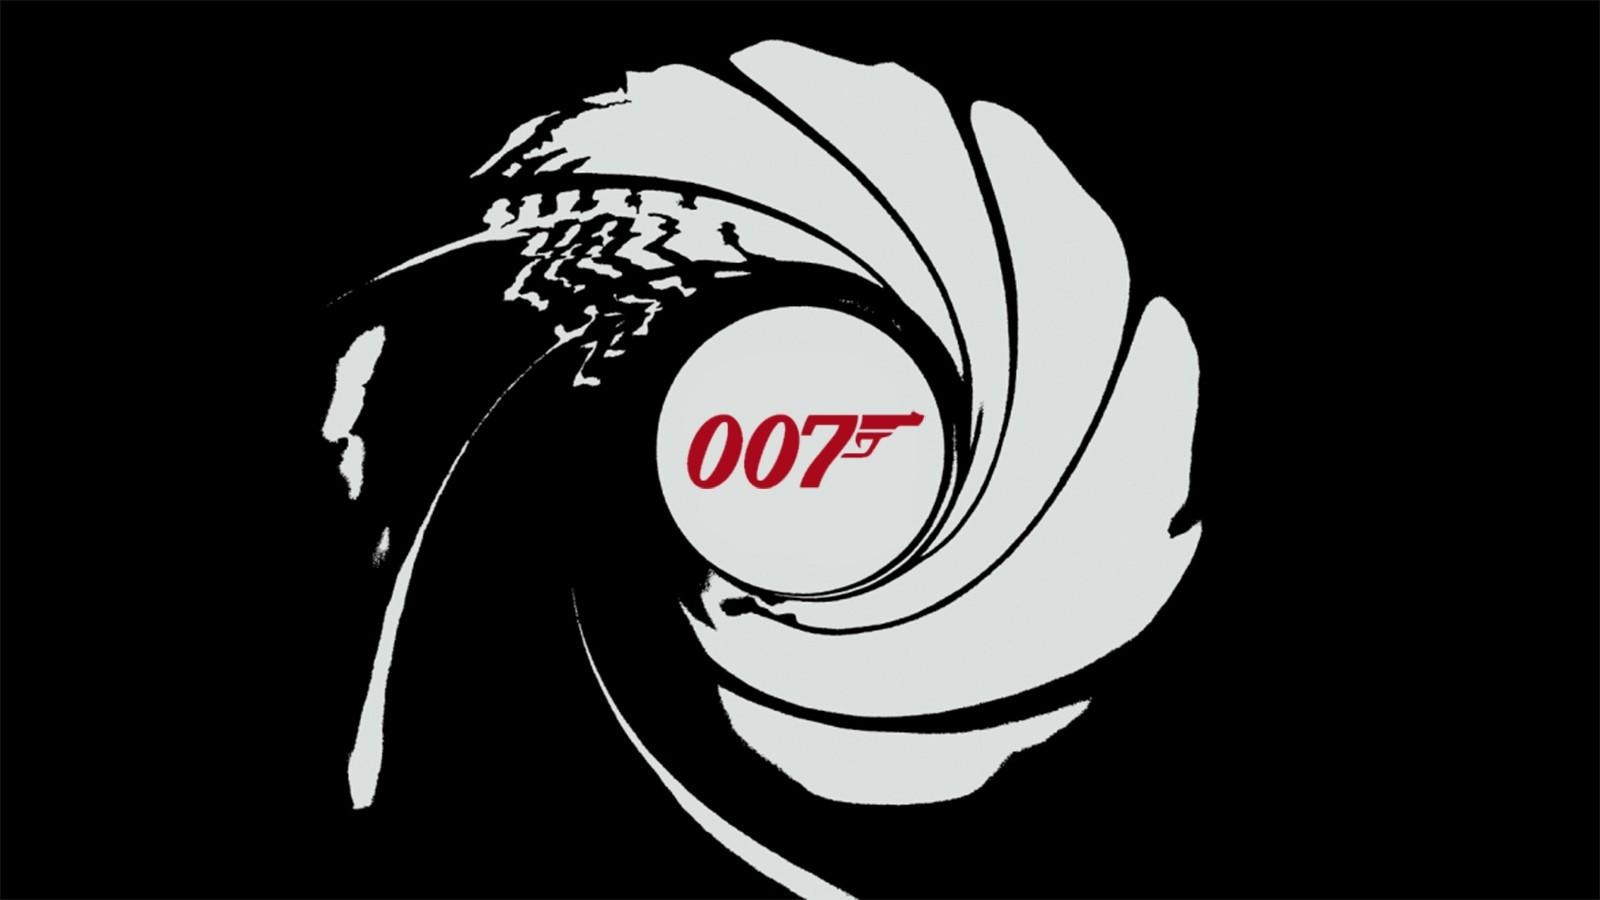 James Bond Wallpaper. All HD Wallpaper Gallery